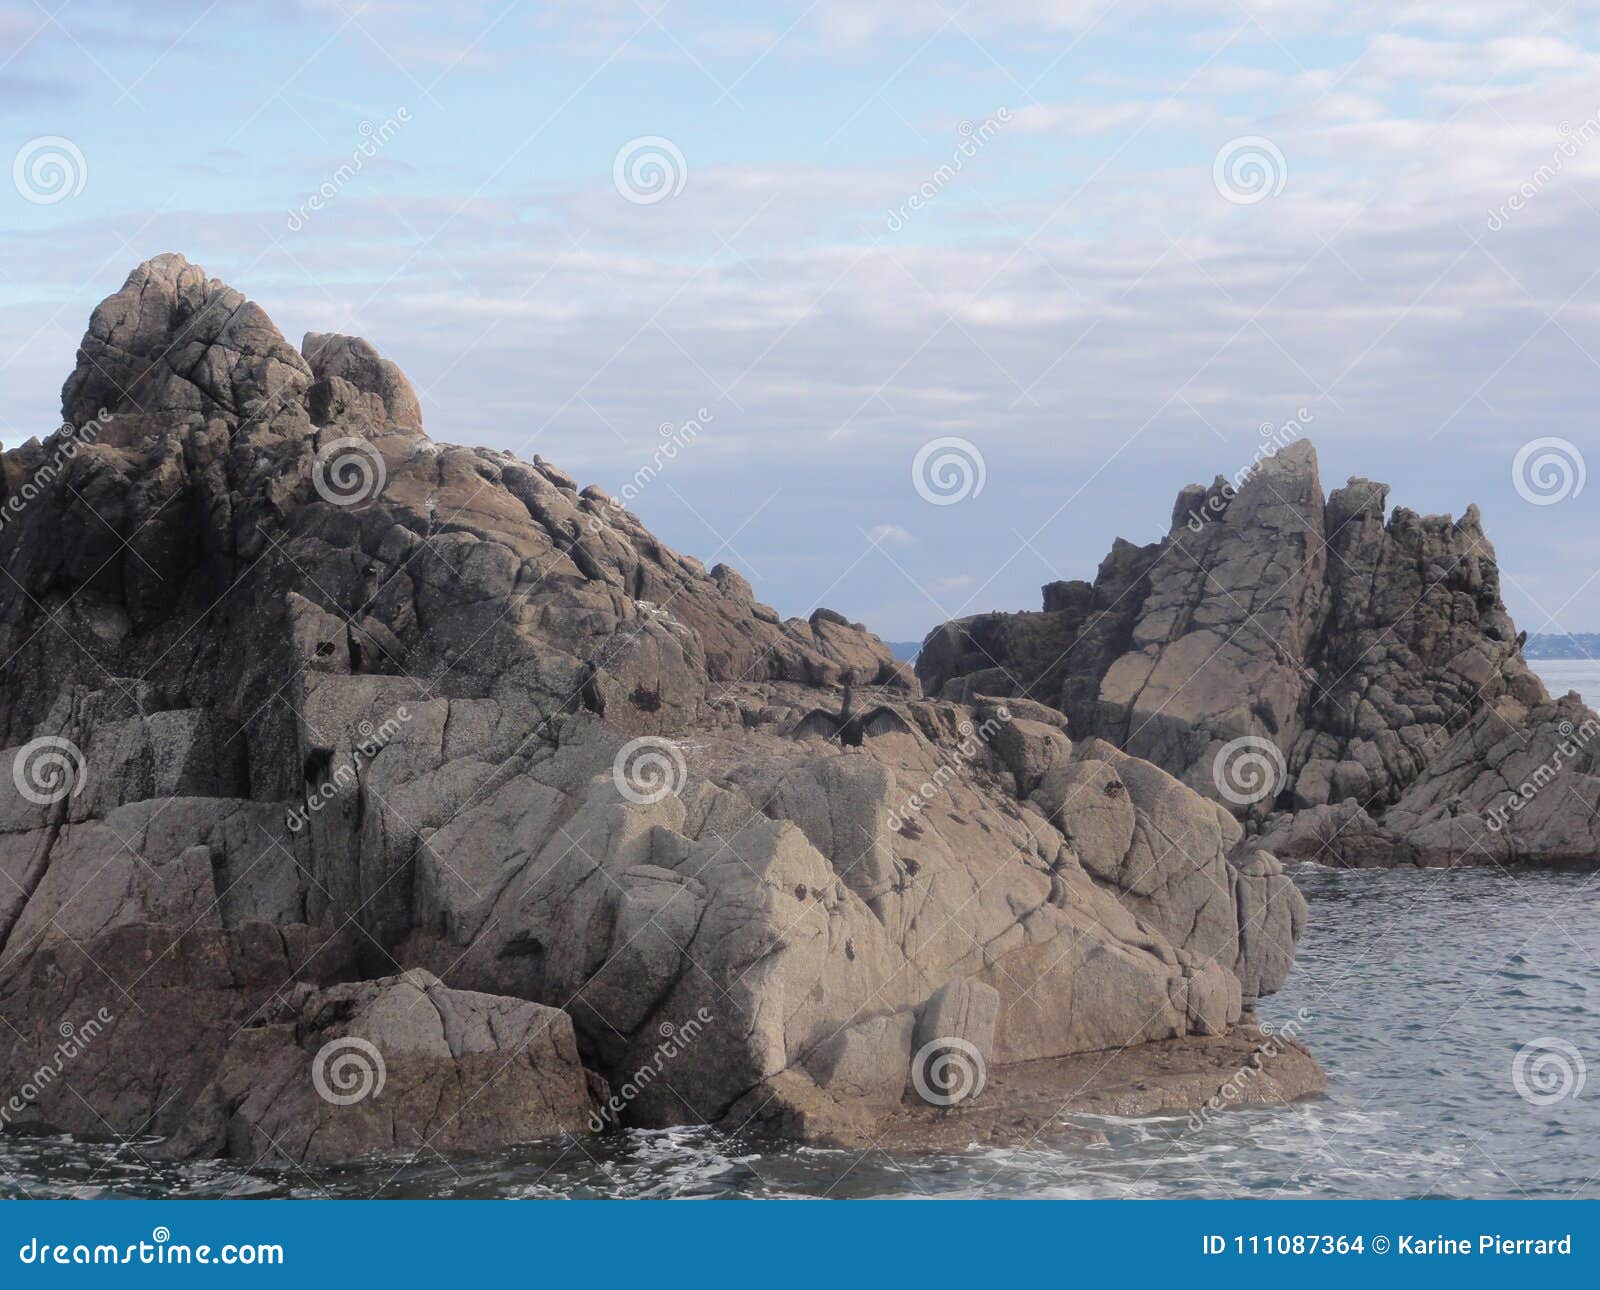 island aux oiseaux, rocks, sea - bretagne - france